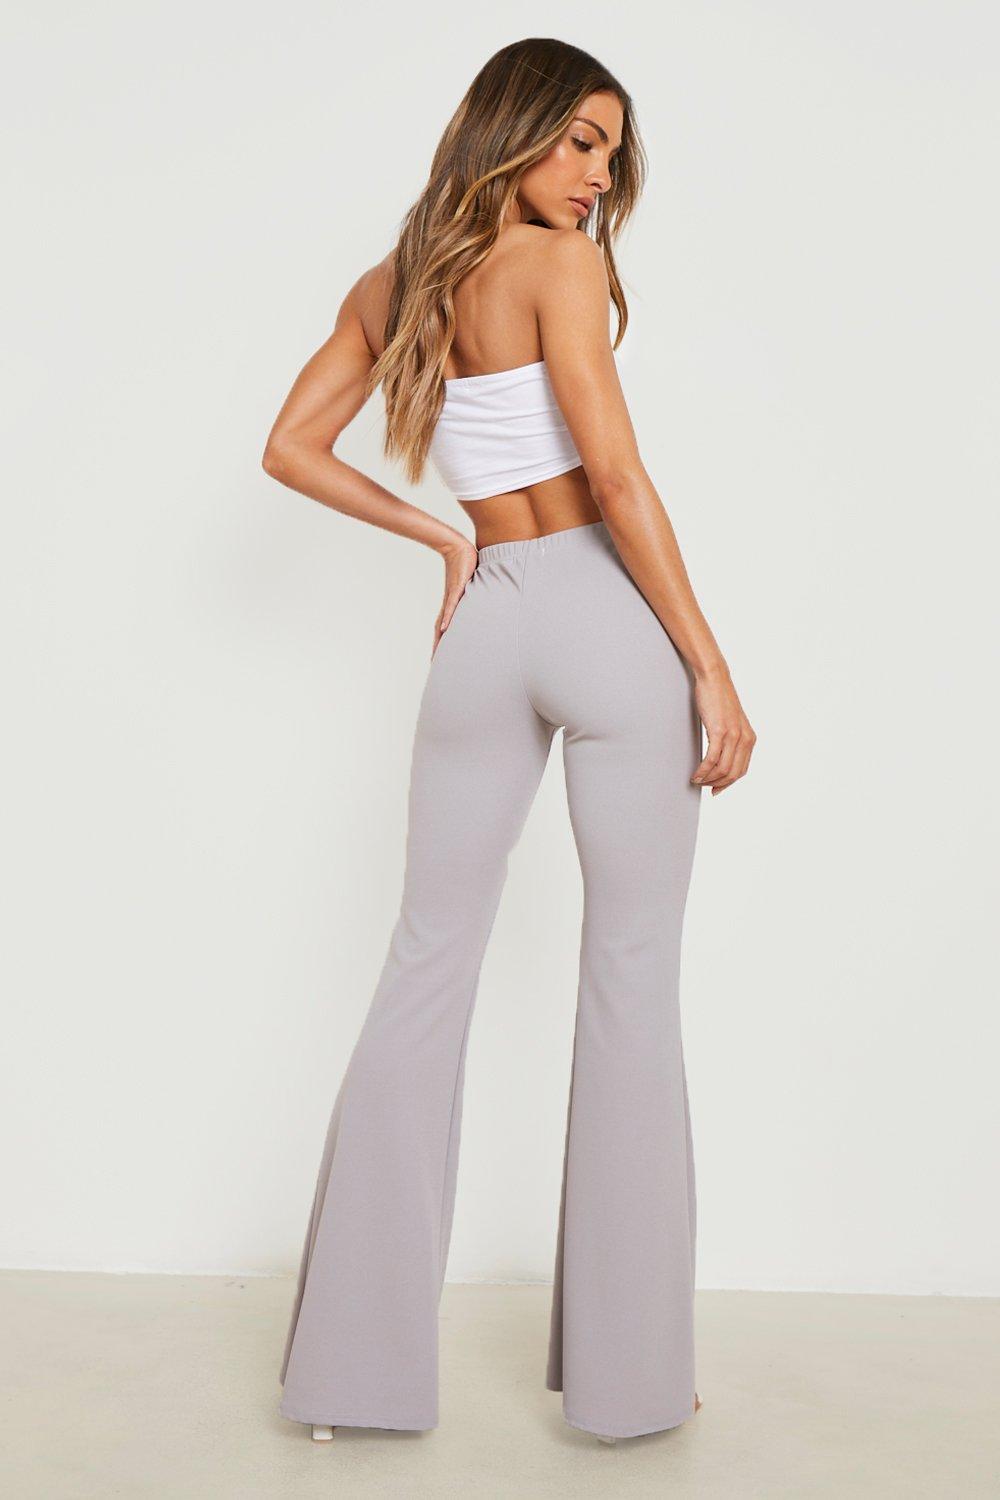 https://media.boohoo.com/i/boohoo/gzz21191_grey_xl_1/female-grey-low-rise-skinny-flare-pants